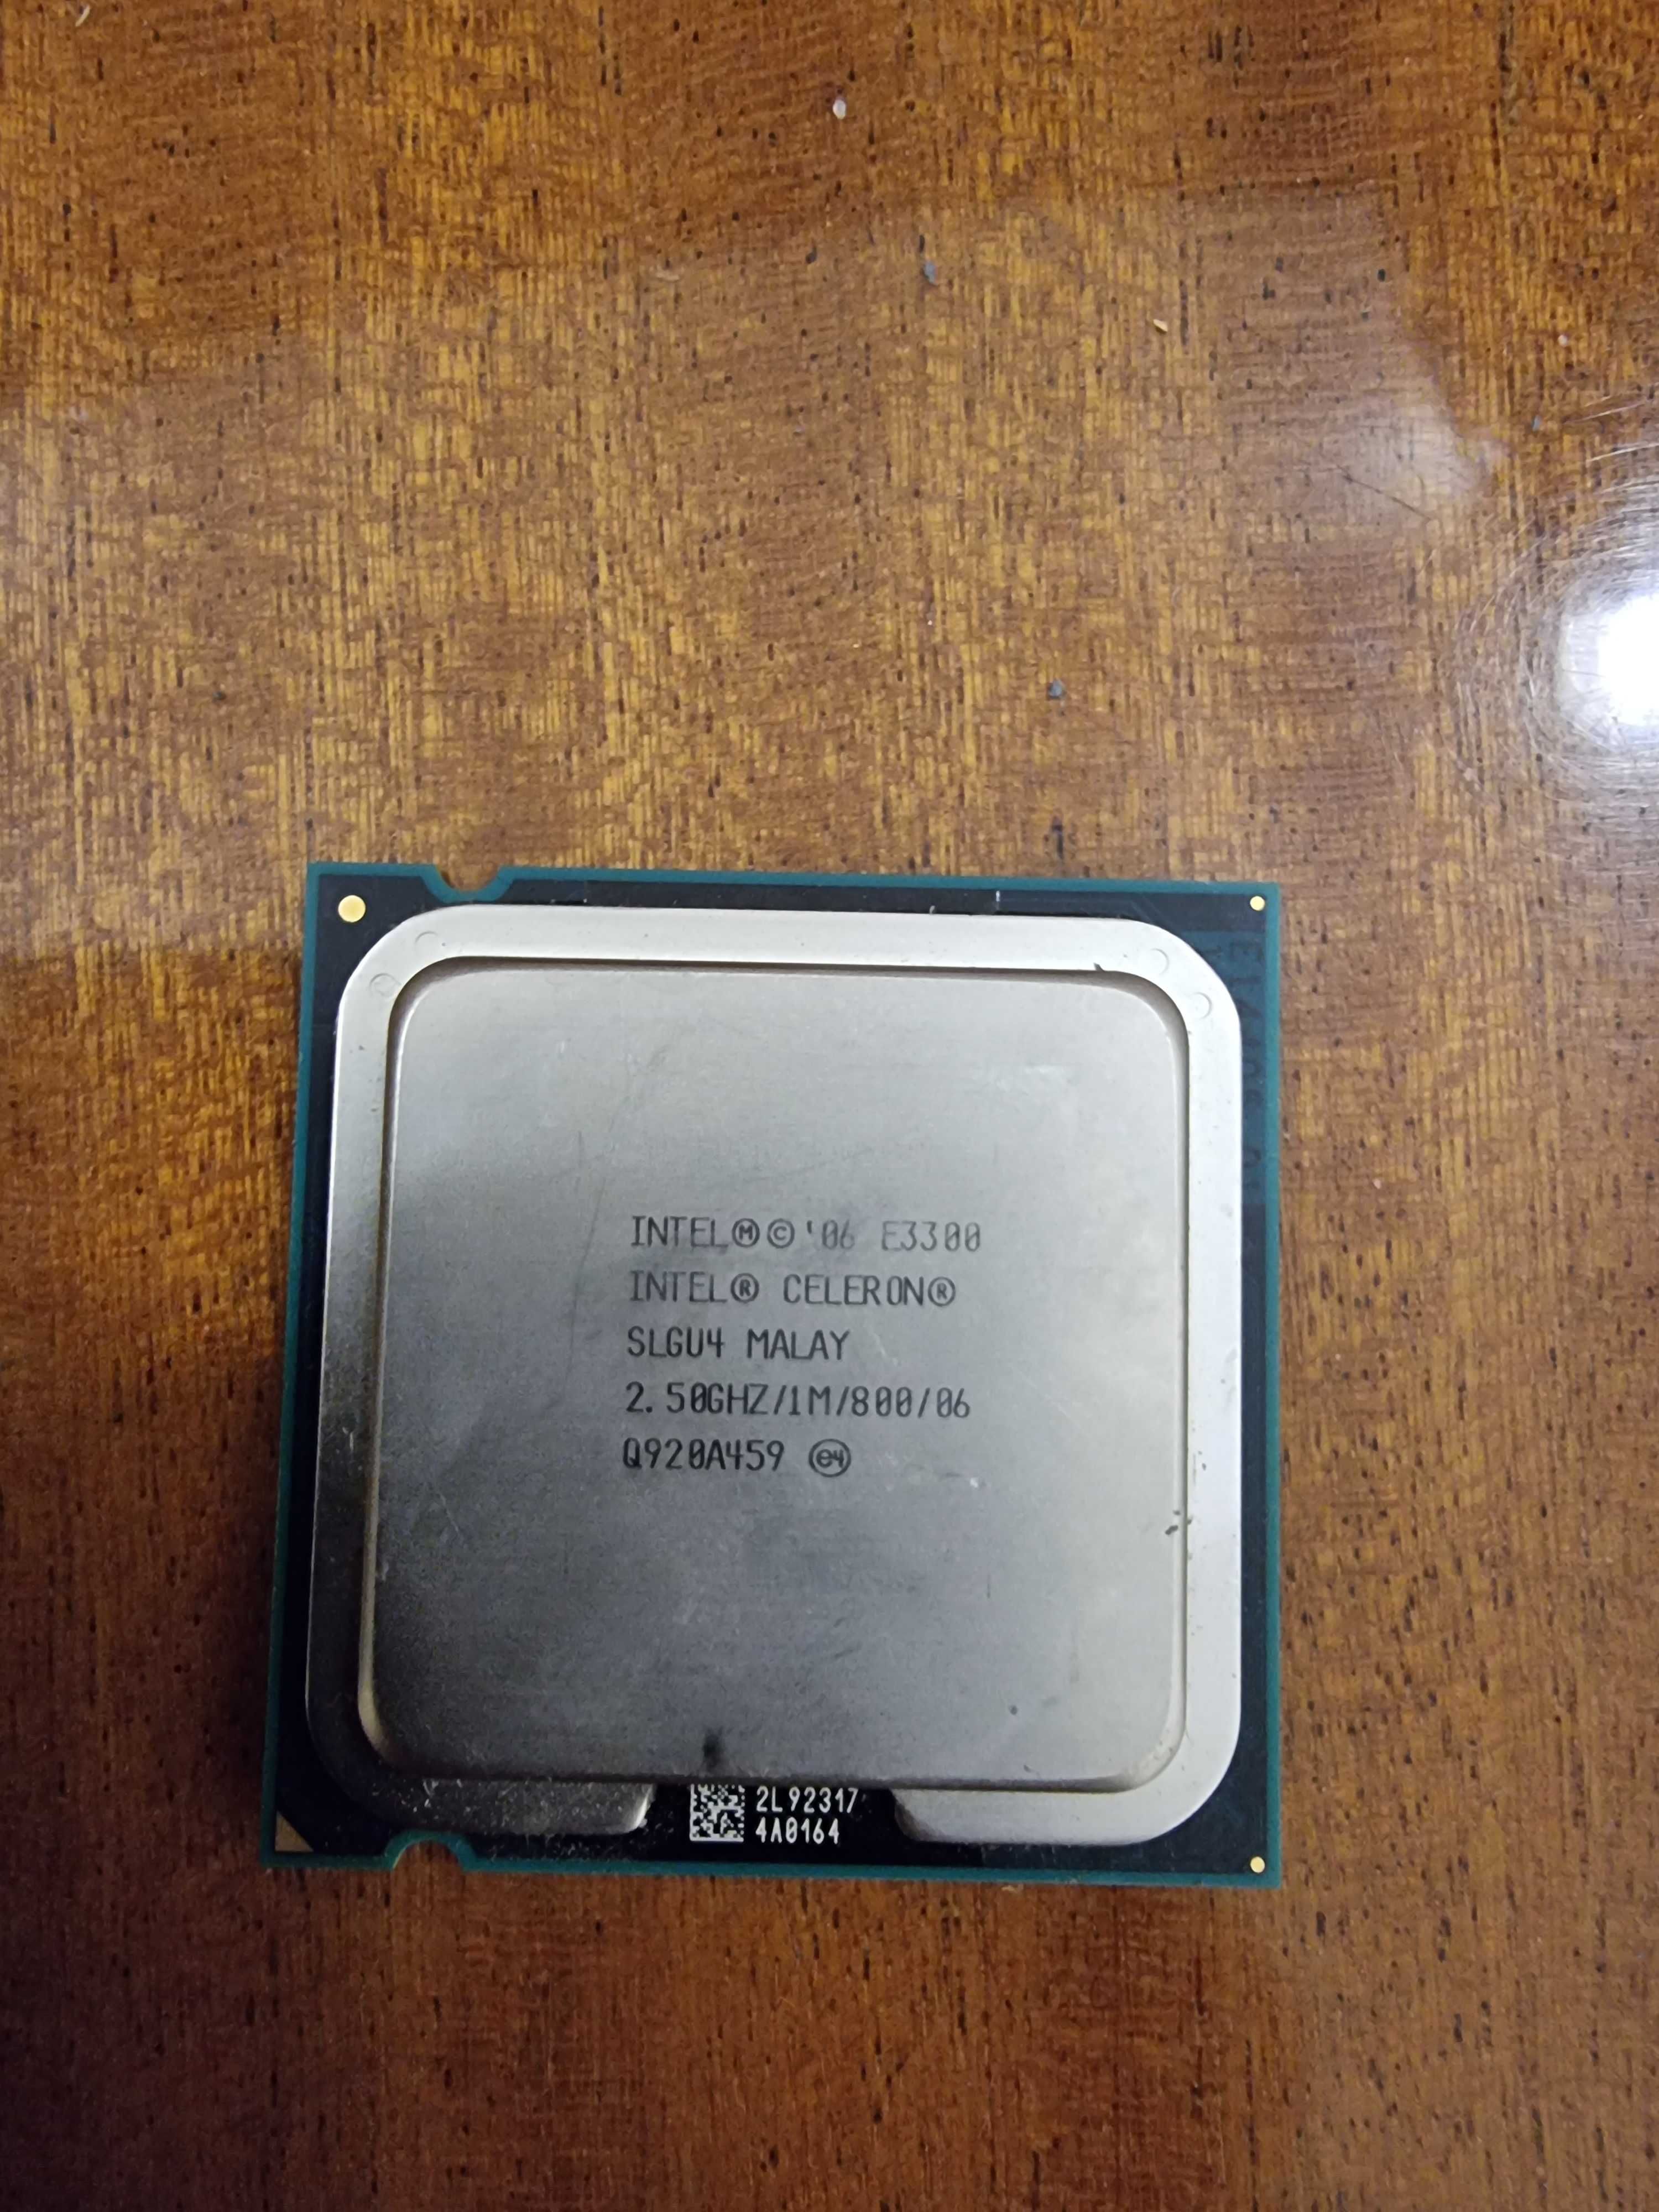 Двухъядерный процессор Intel Celeron E3300 2.5 GHz (s775)